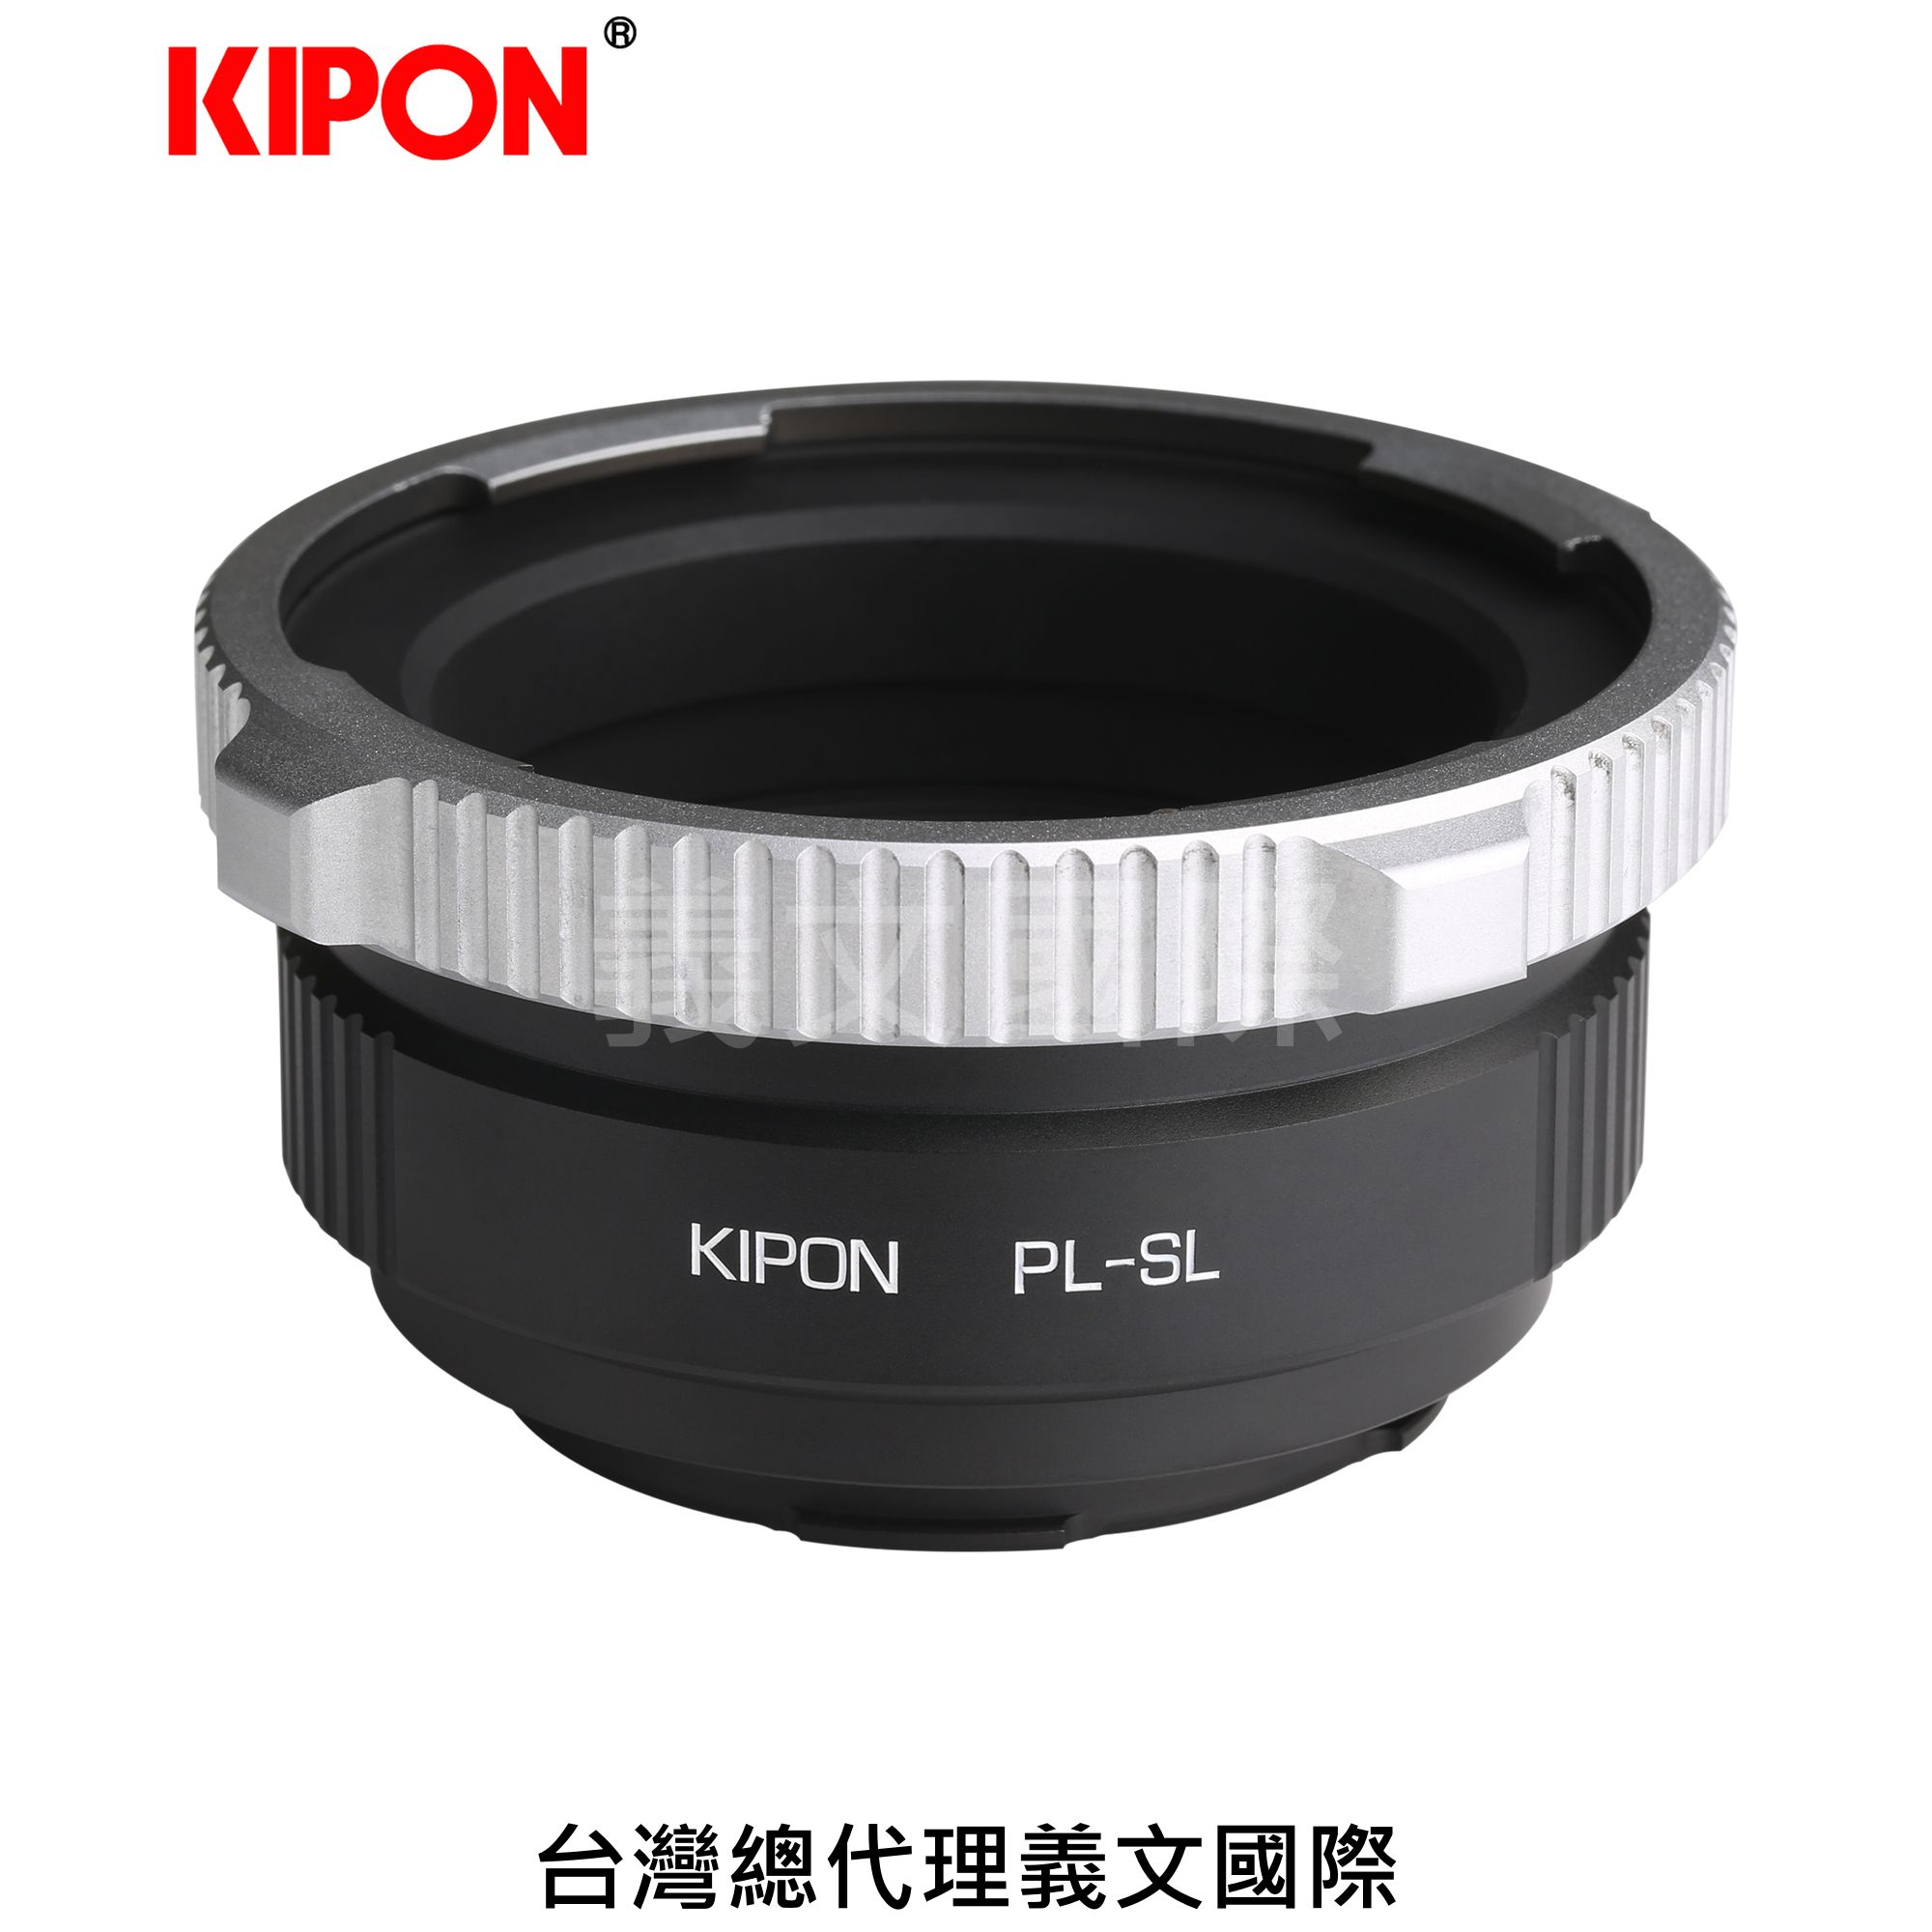 Kipon轉接環專賣店:PRO PL-L(Leica SL,徠卡,Arri PL,S1,S1R,S1H,TL,TL2,SIGMA FP)